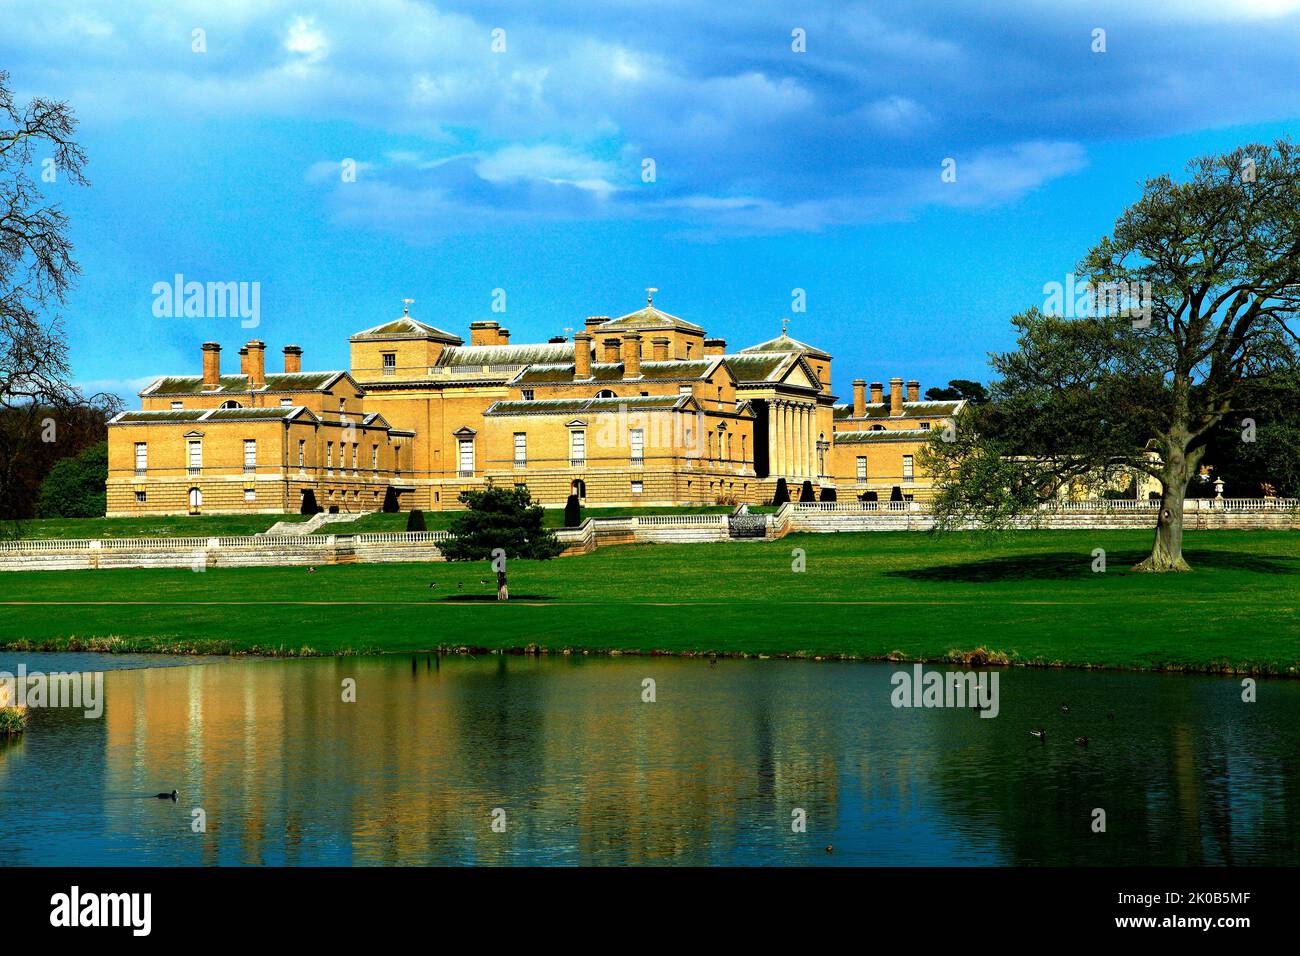 Holkham Hall, Norfolk, viewed across lake, English stately home, Palladian mansion, England, UK Stock Photo